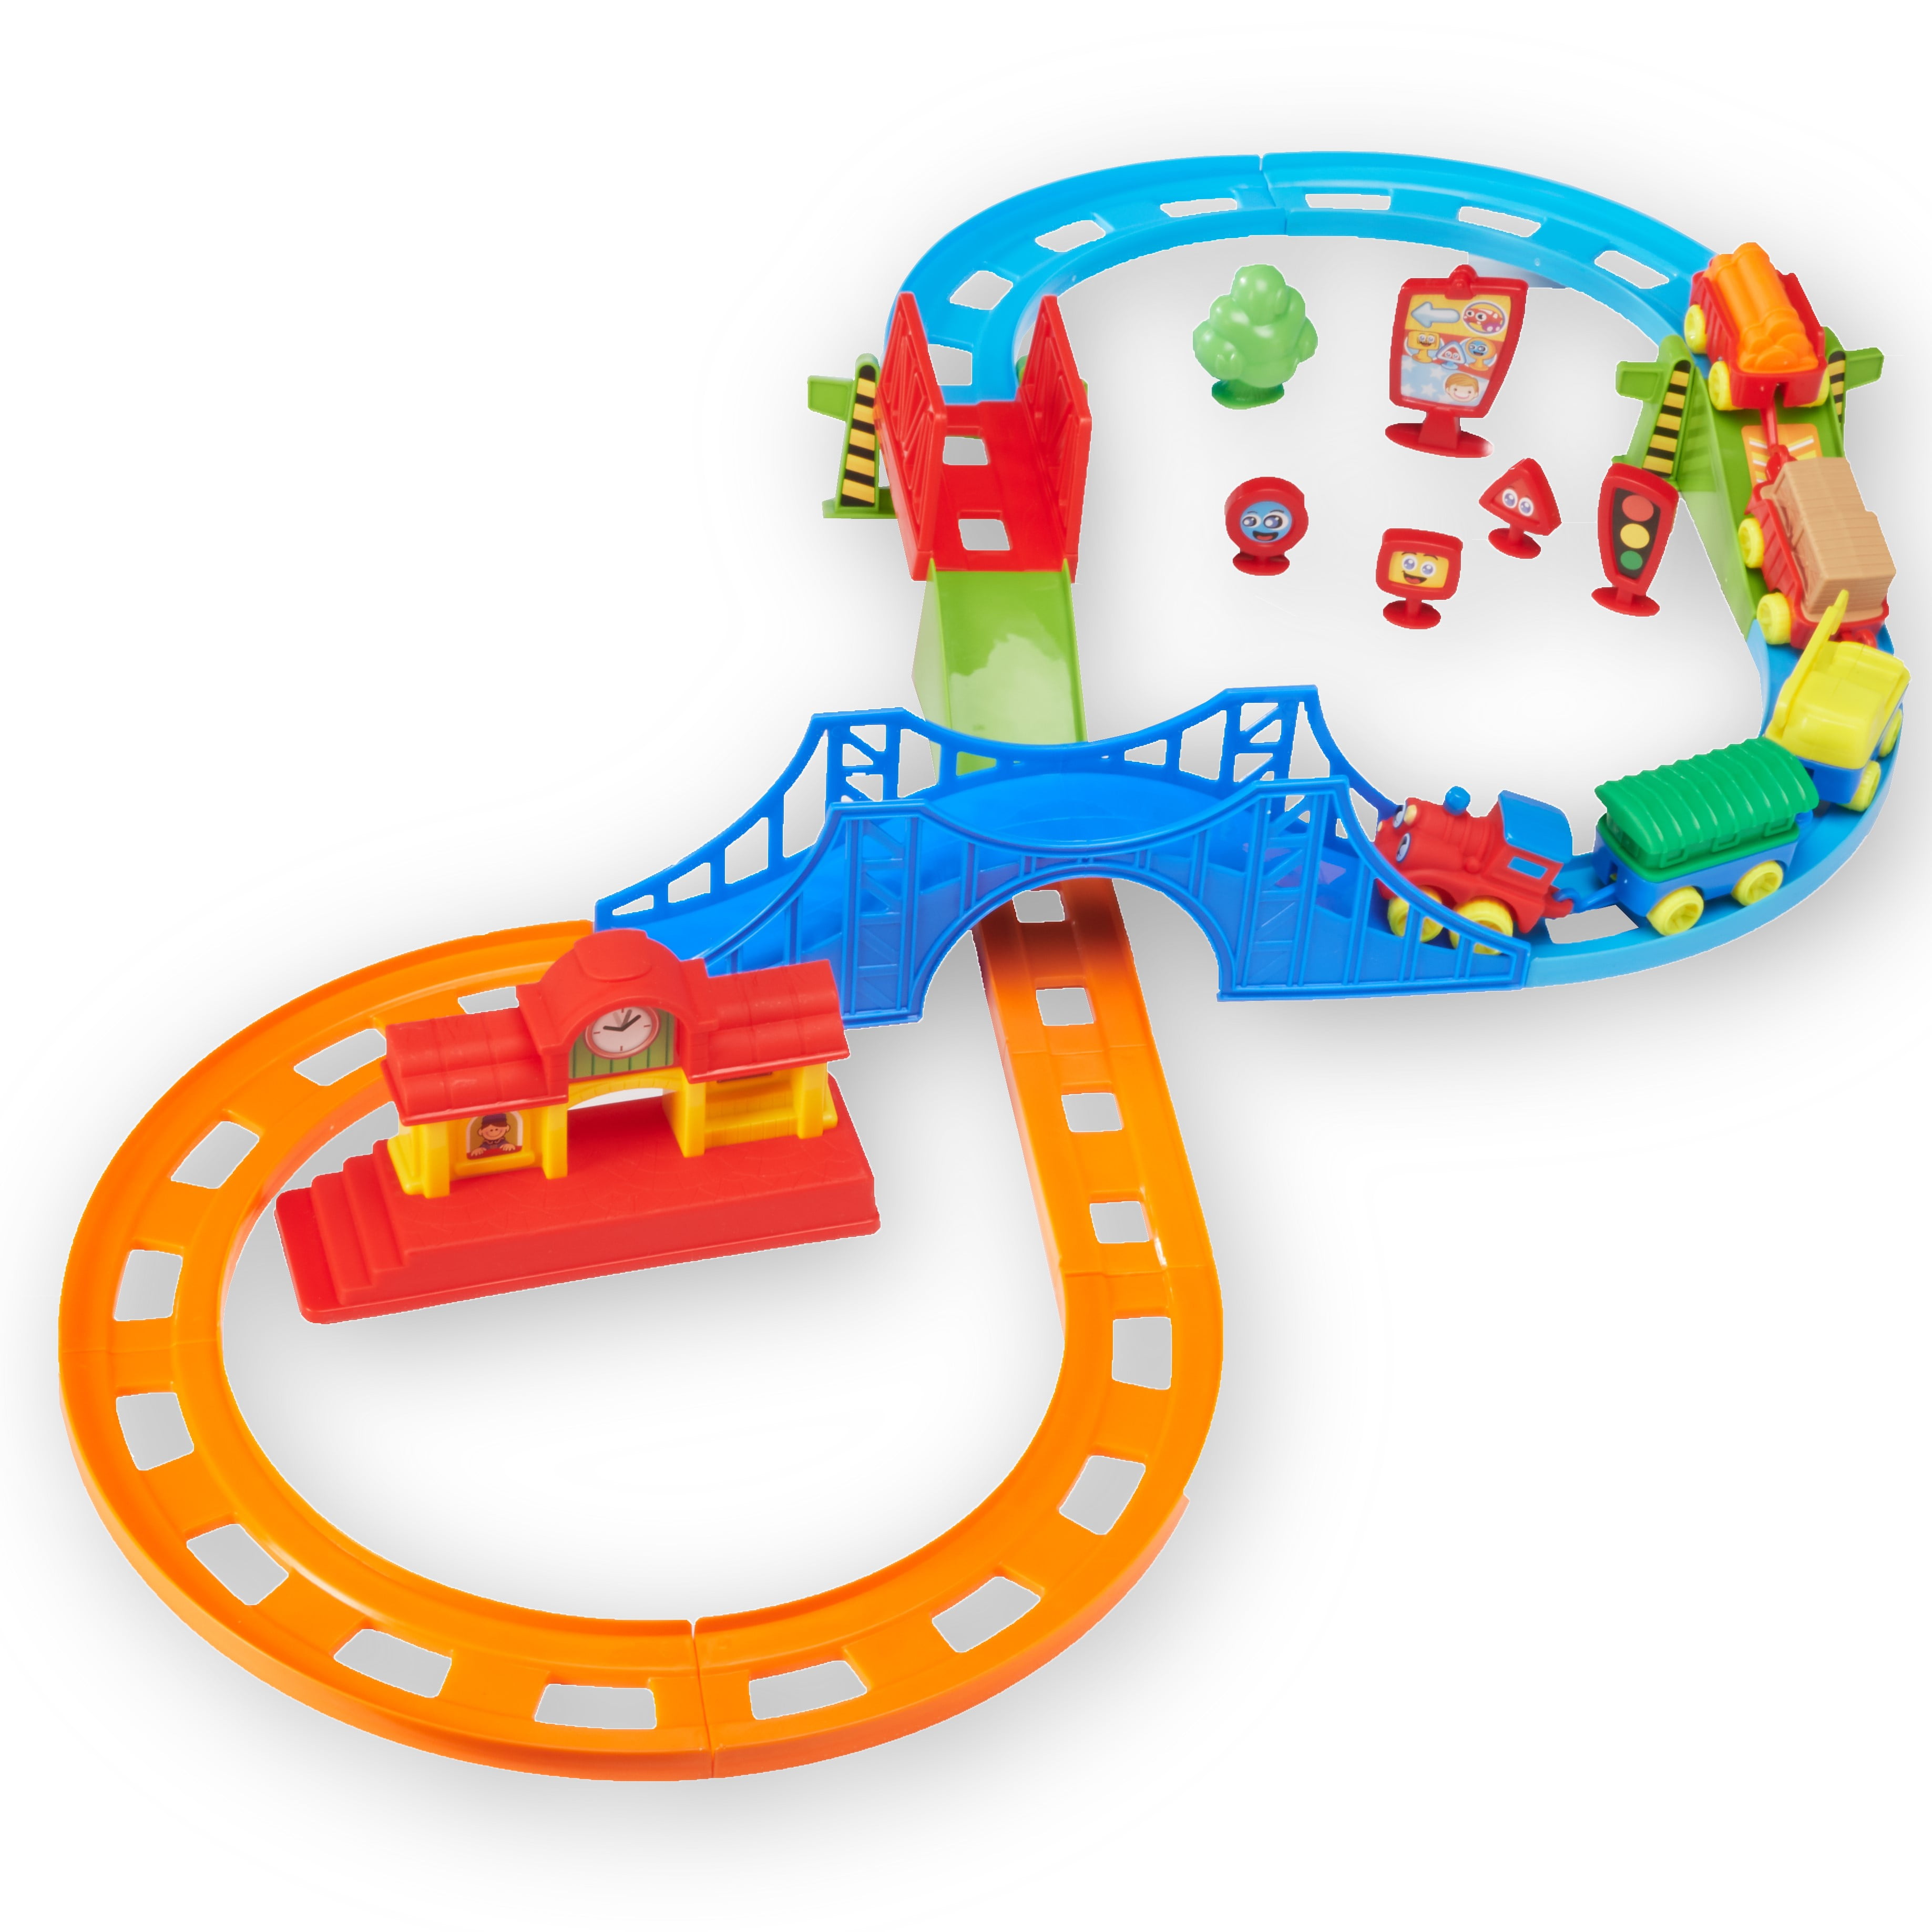 Kid connection preschool train play set 